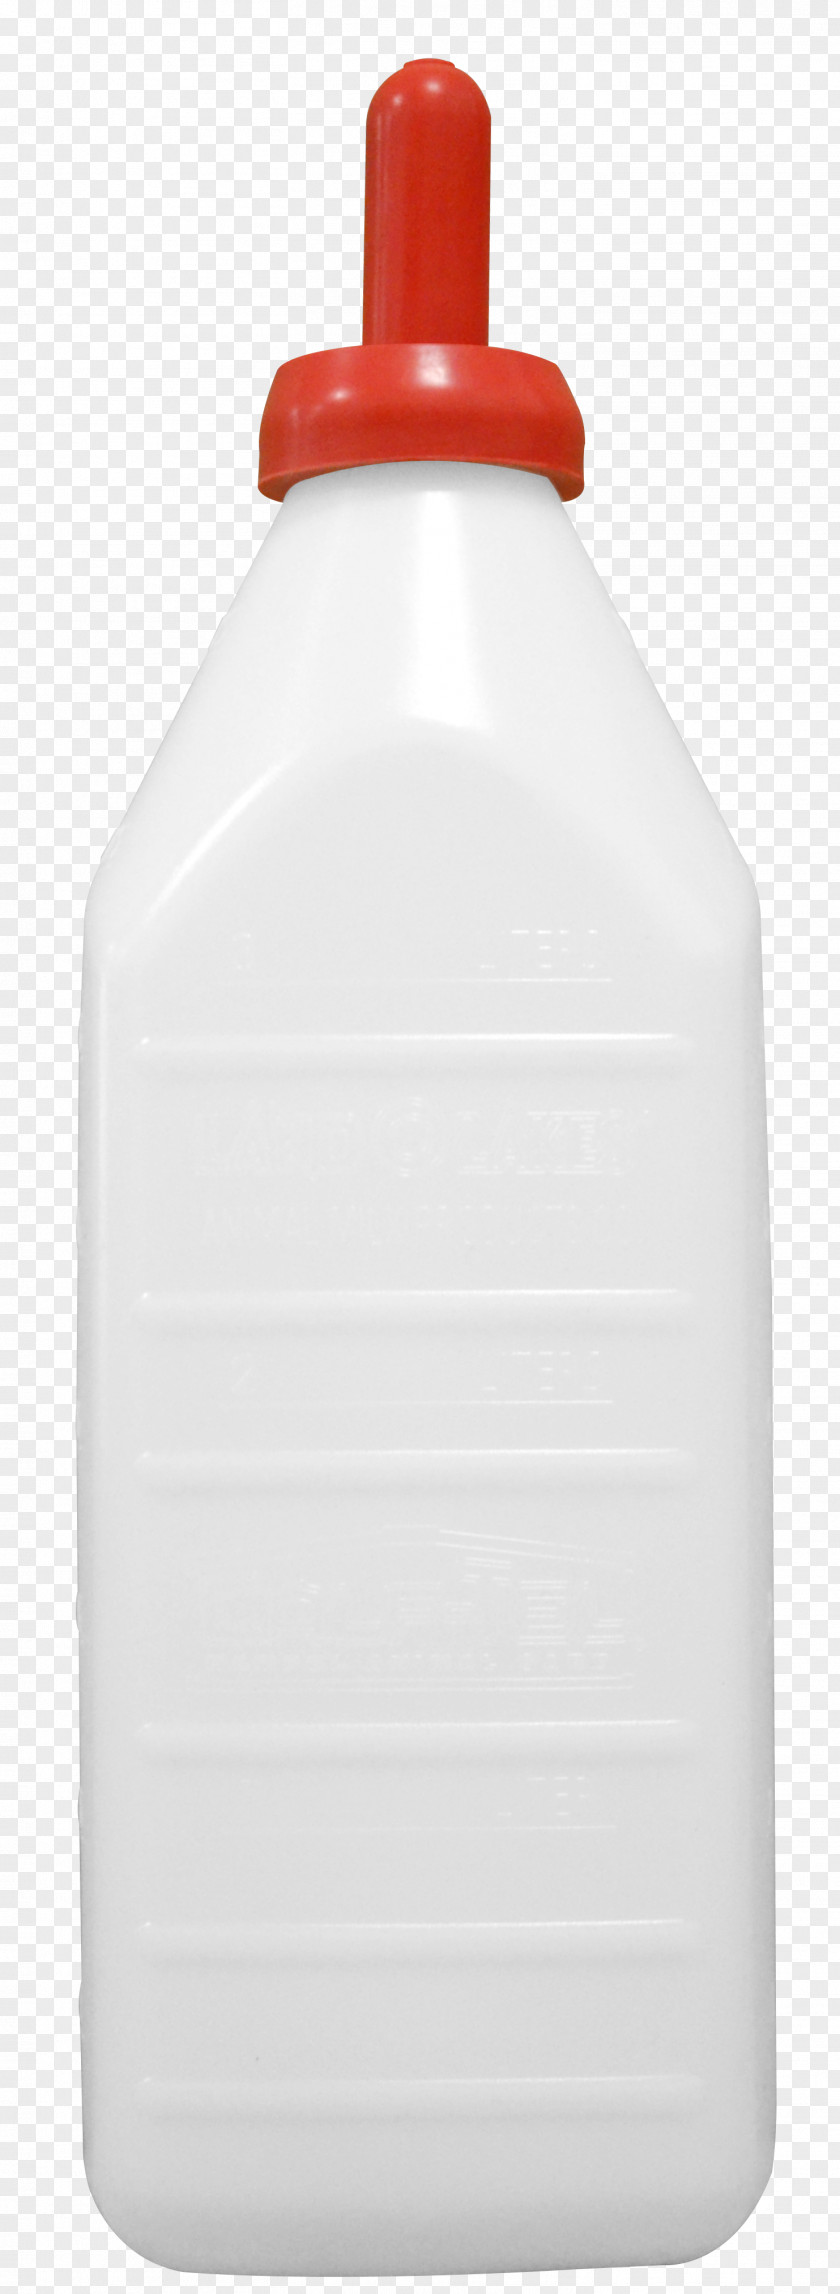 Bottle Water Bottles Plastic Liquid PNG